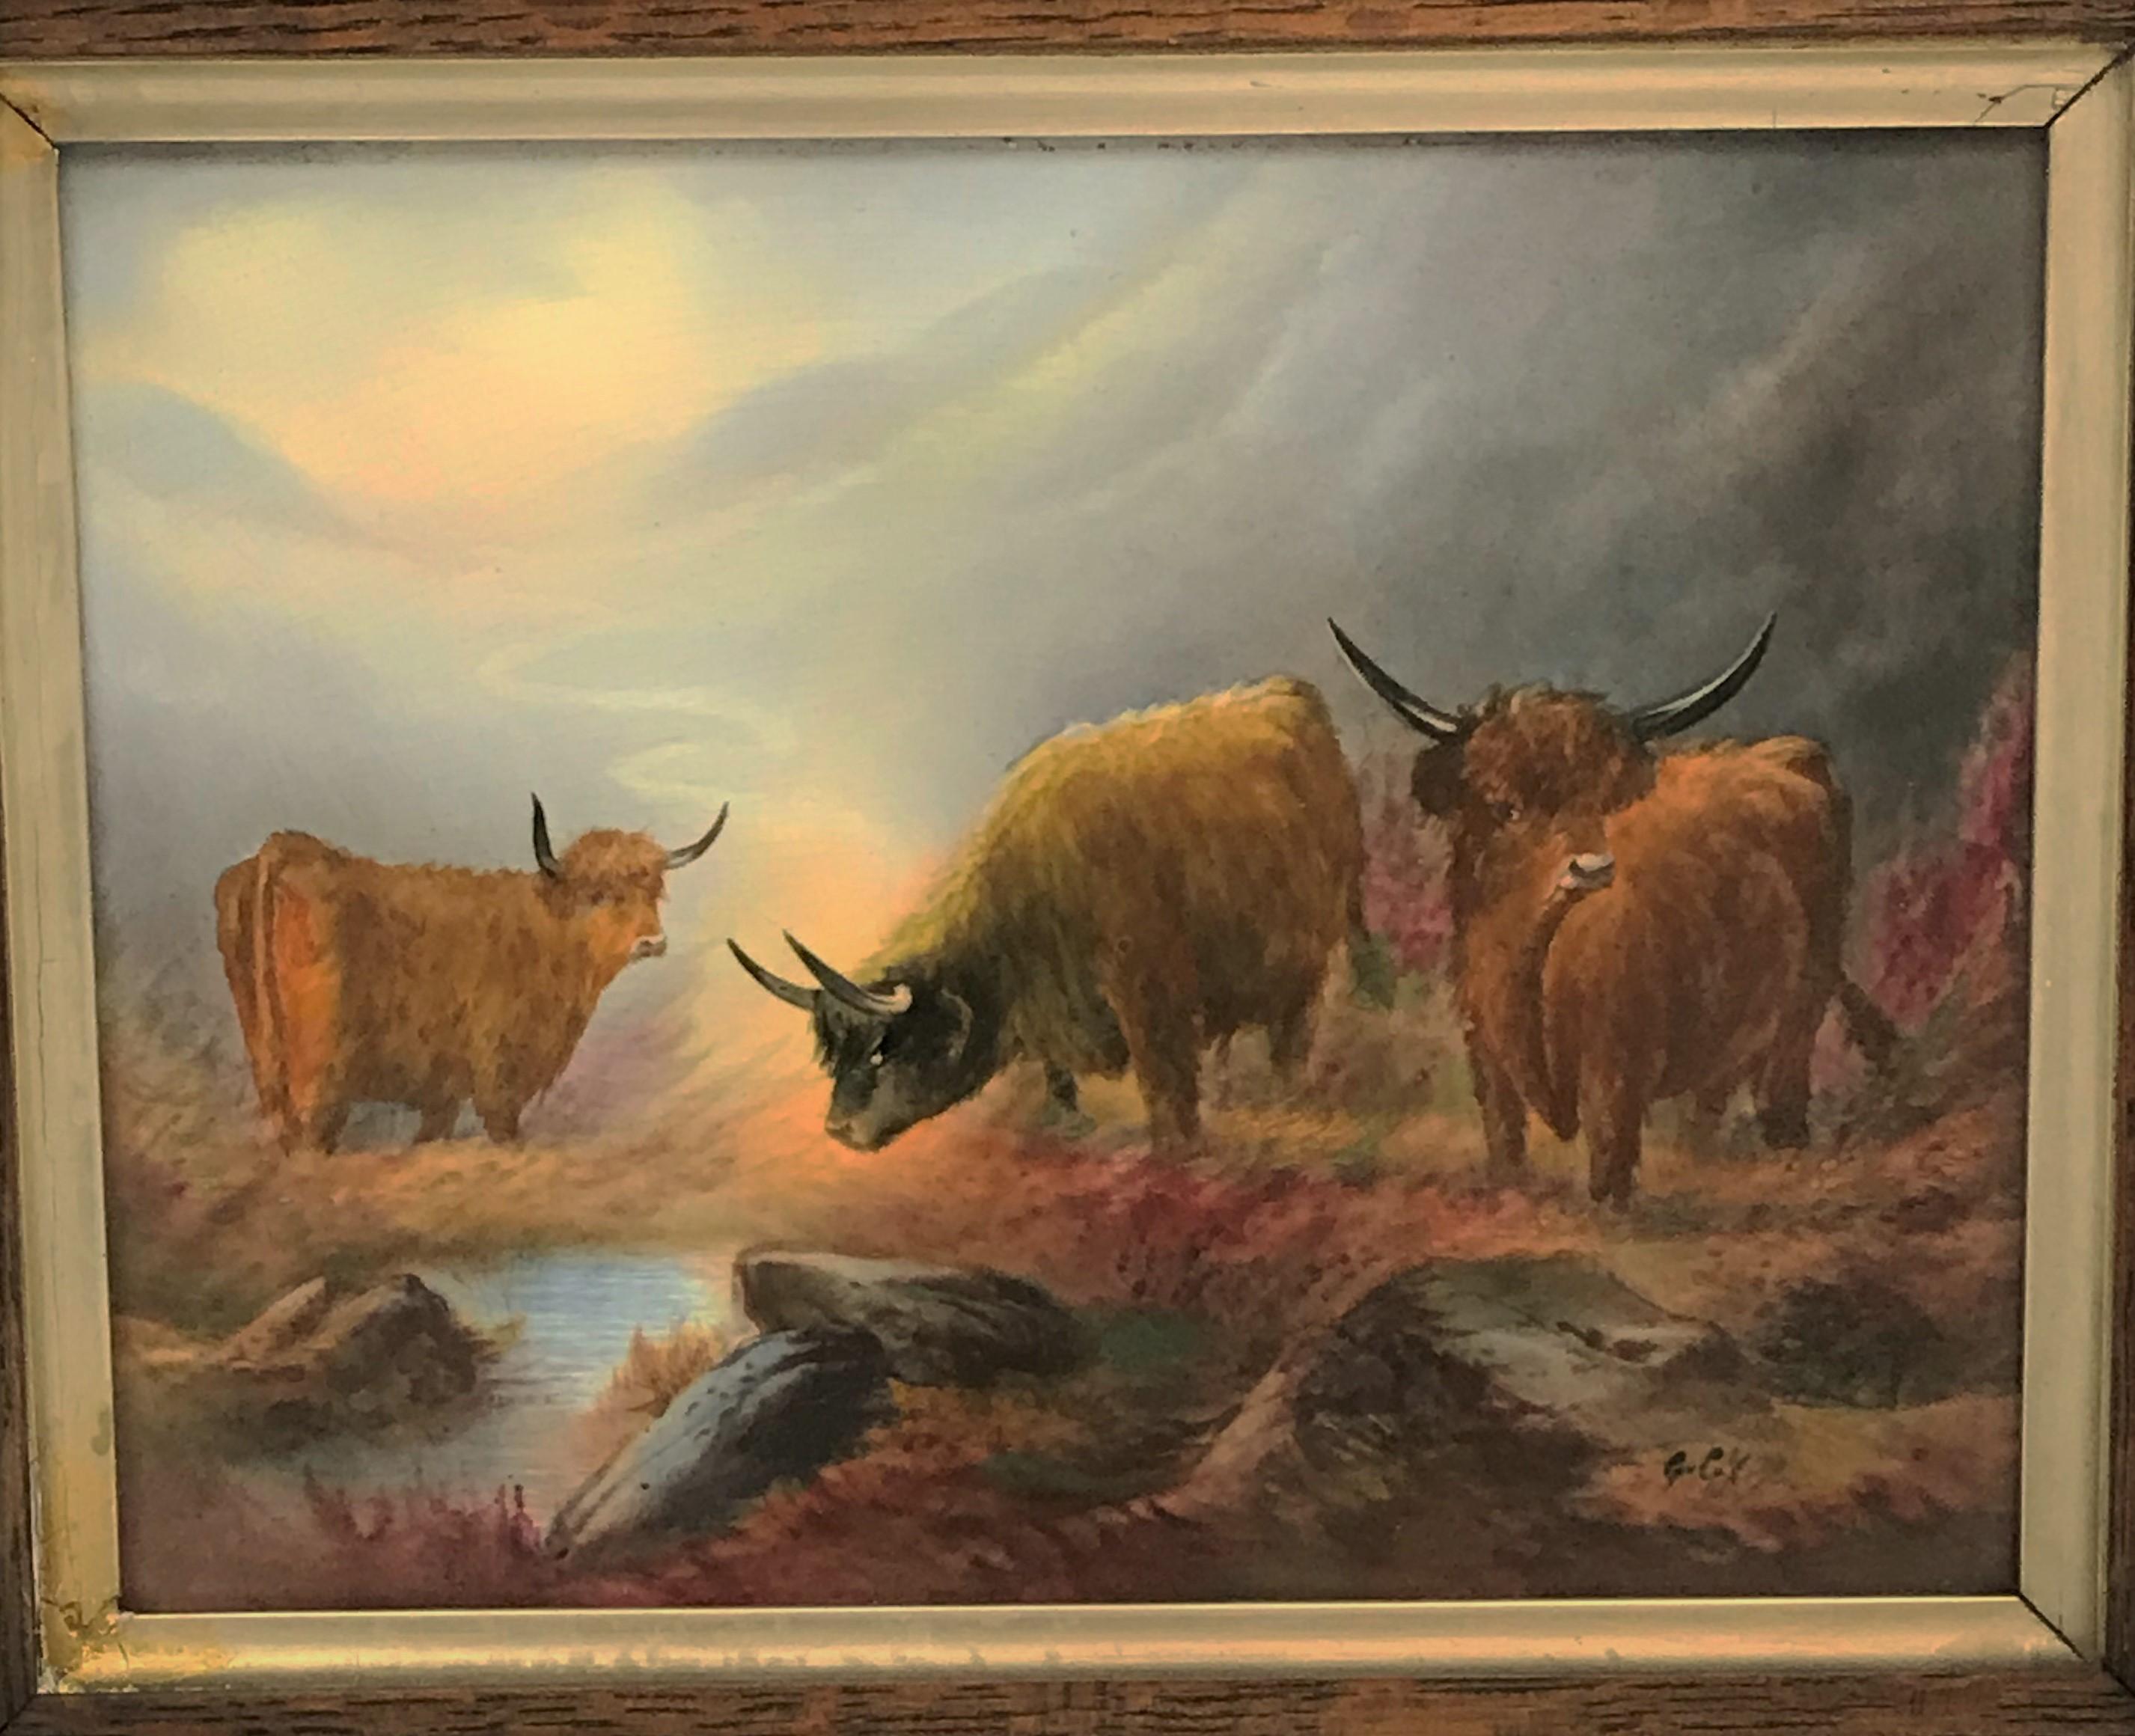 Framed porcelain plaque. Crown Ducal Fielding, England. Highland cattle scene. Lovely colors similar to Stinton painted Worcester.

Oak frame with gilded detail. Frame size 15